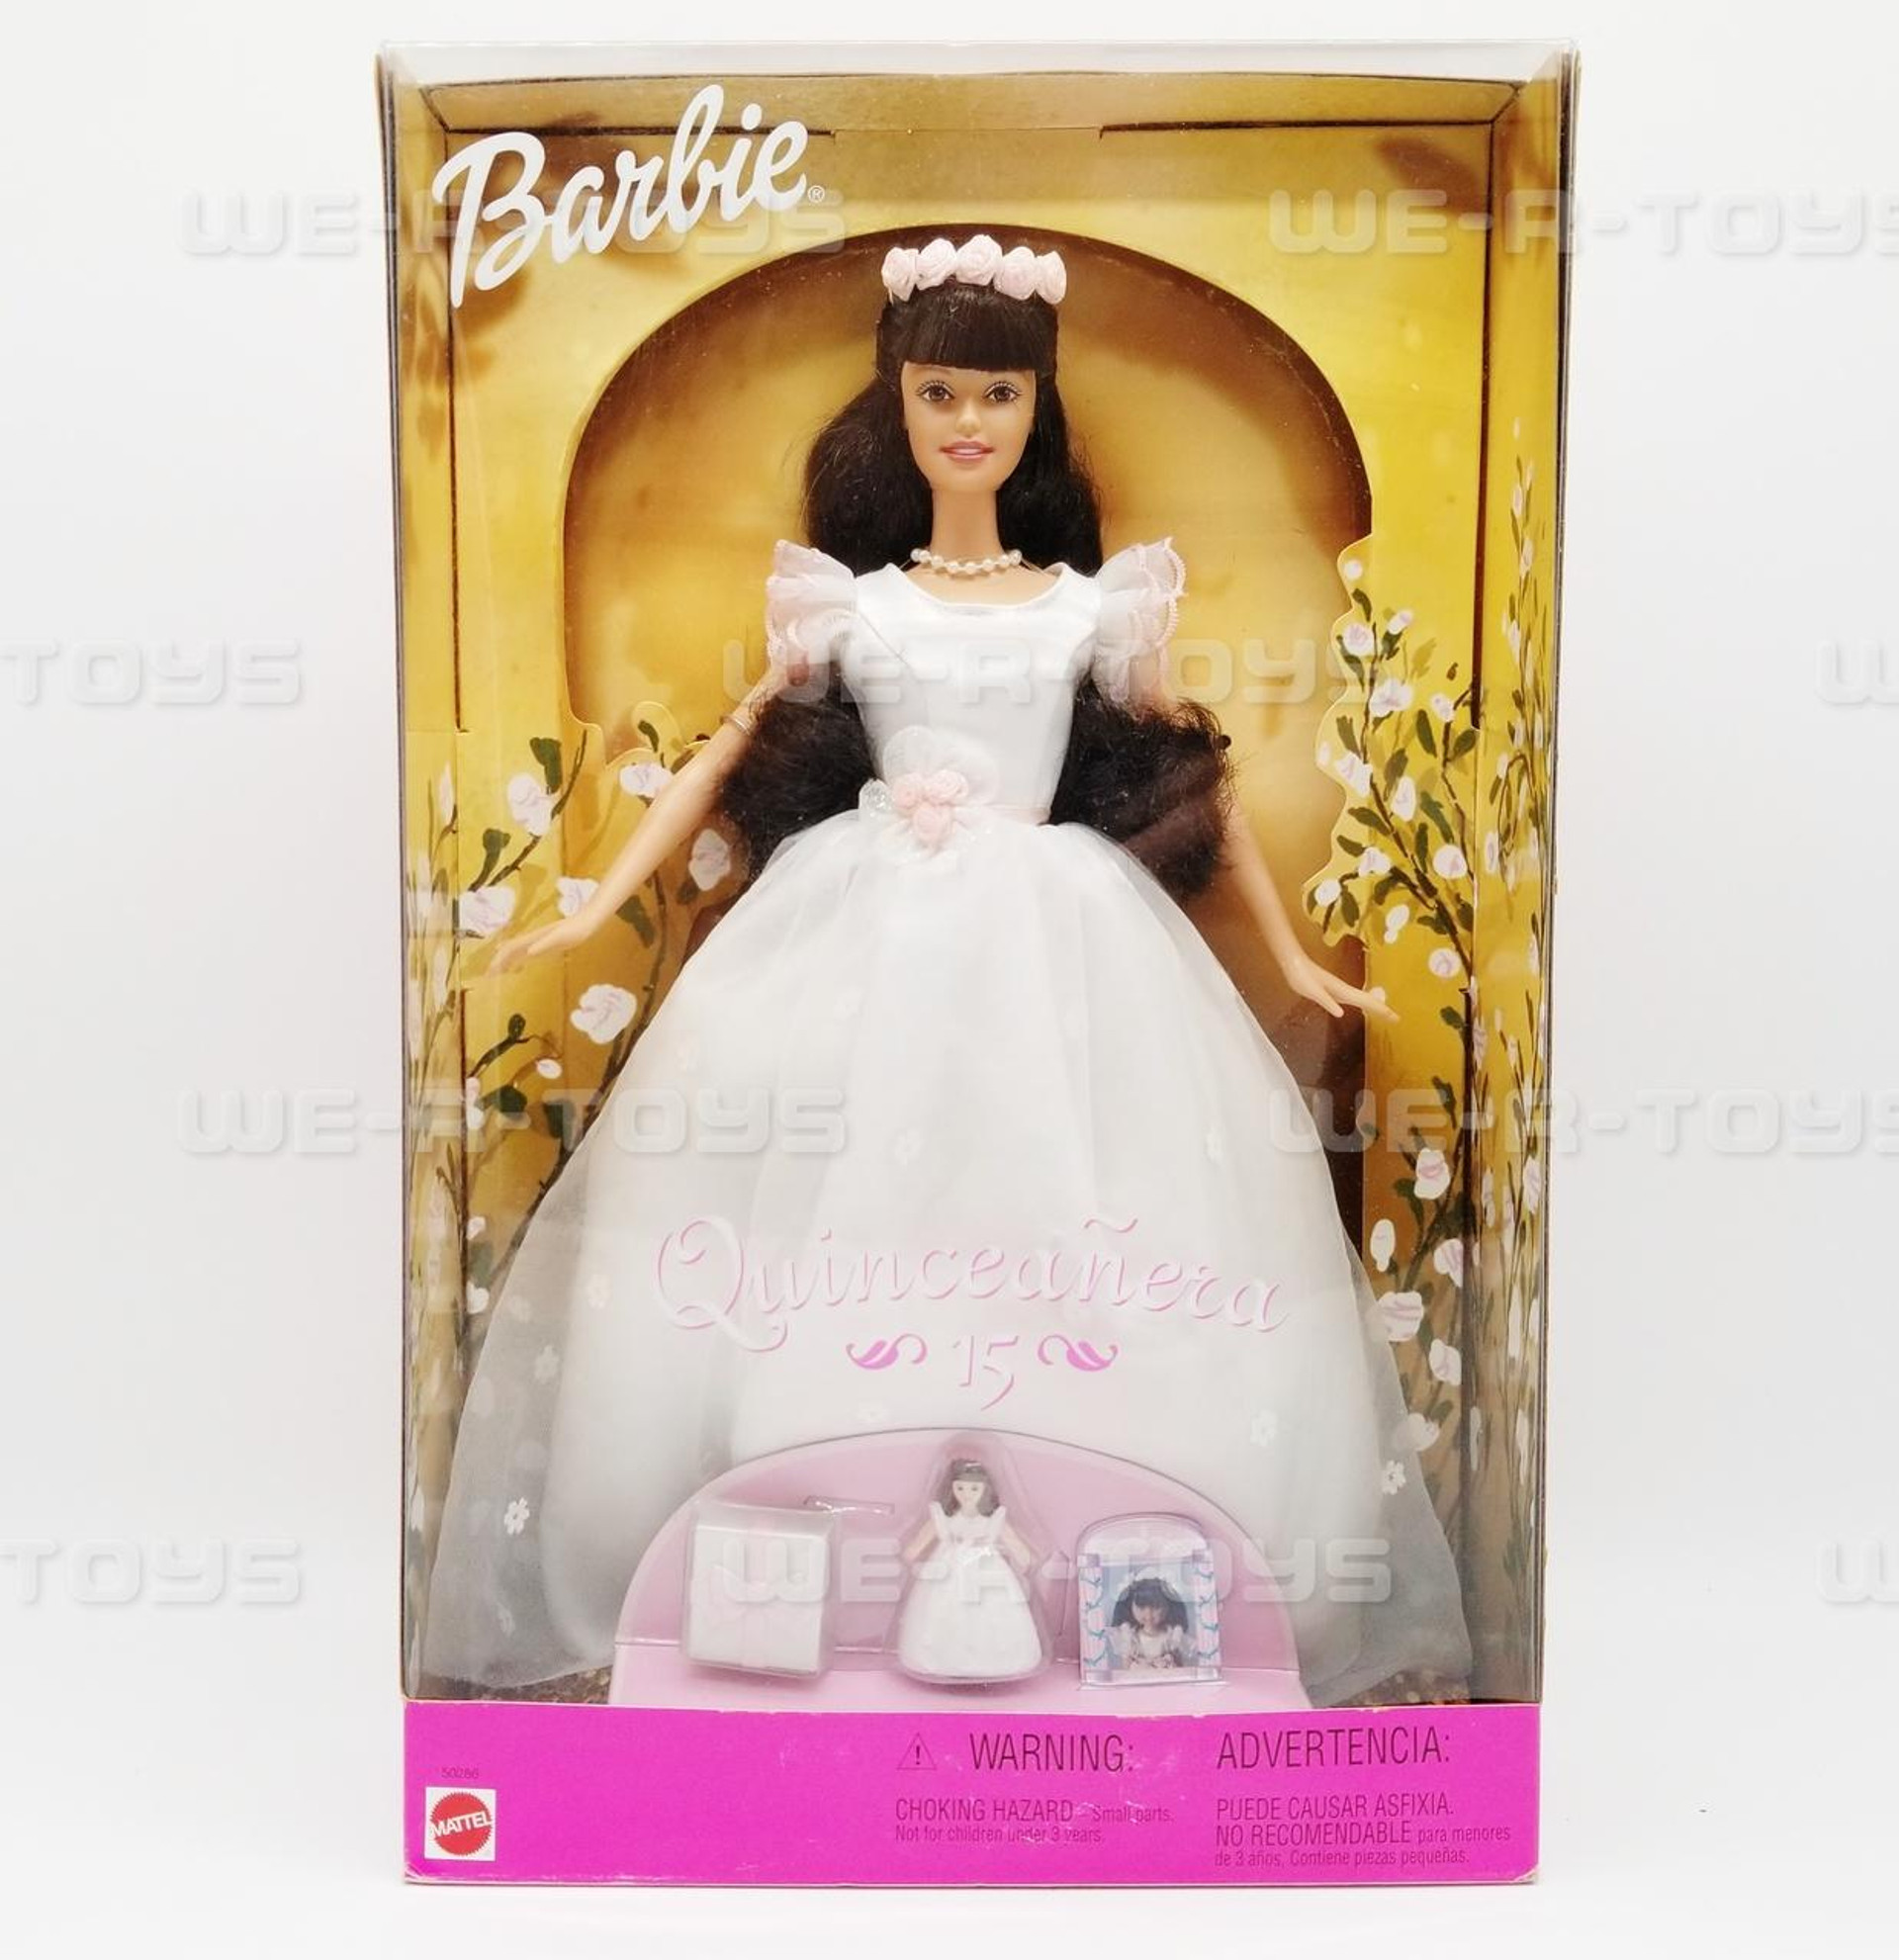 Barbie Quinceanera 15 Barbie Doll 2000 Mattel No. 50286 NEW - We-R-Toys